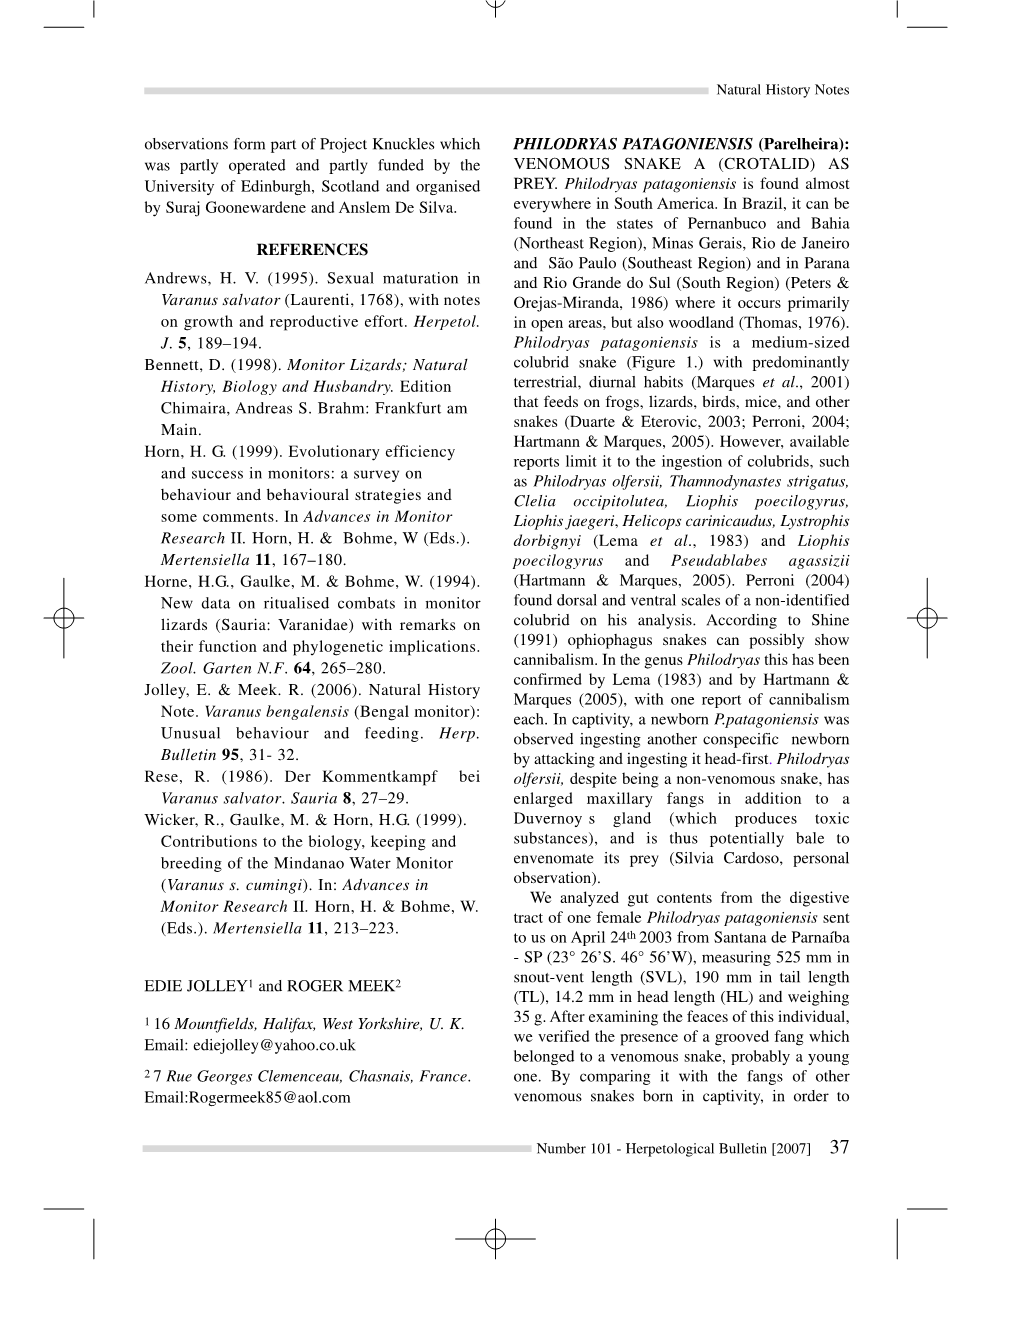 Herp. Bulletin 101.Qxd 10/09/2007 11:07 Page 37